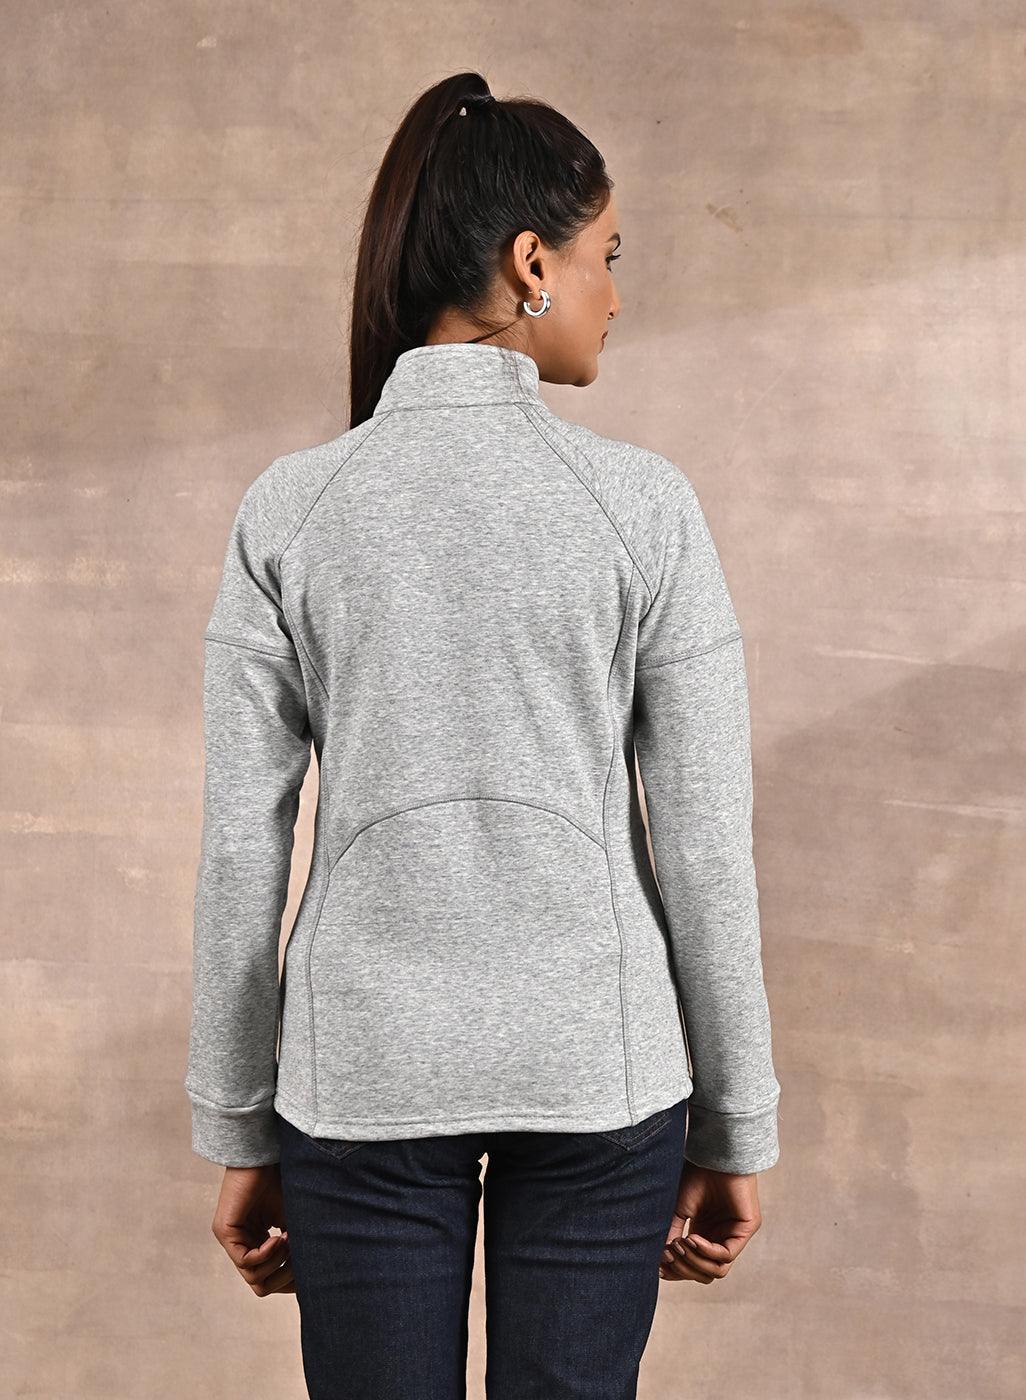 Grey High-Neck Zip-Up Casual Fleece Jacket - Lakshita